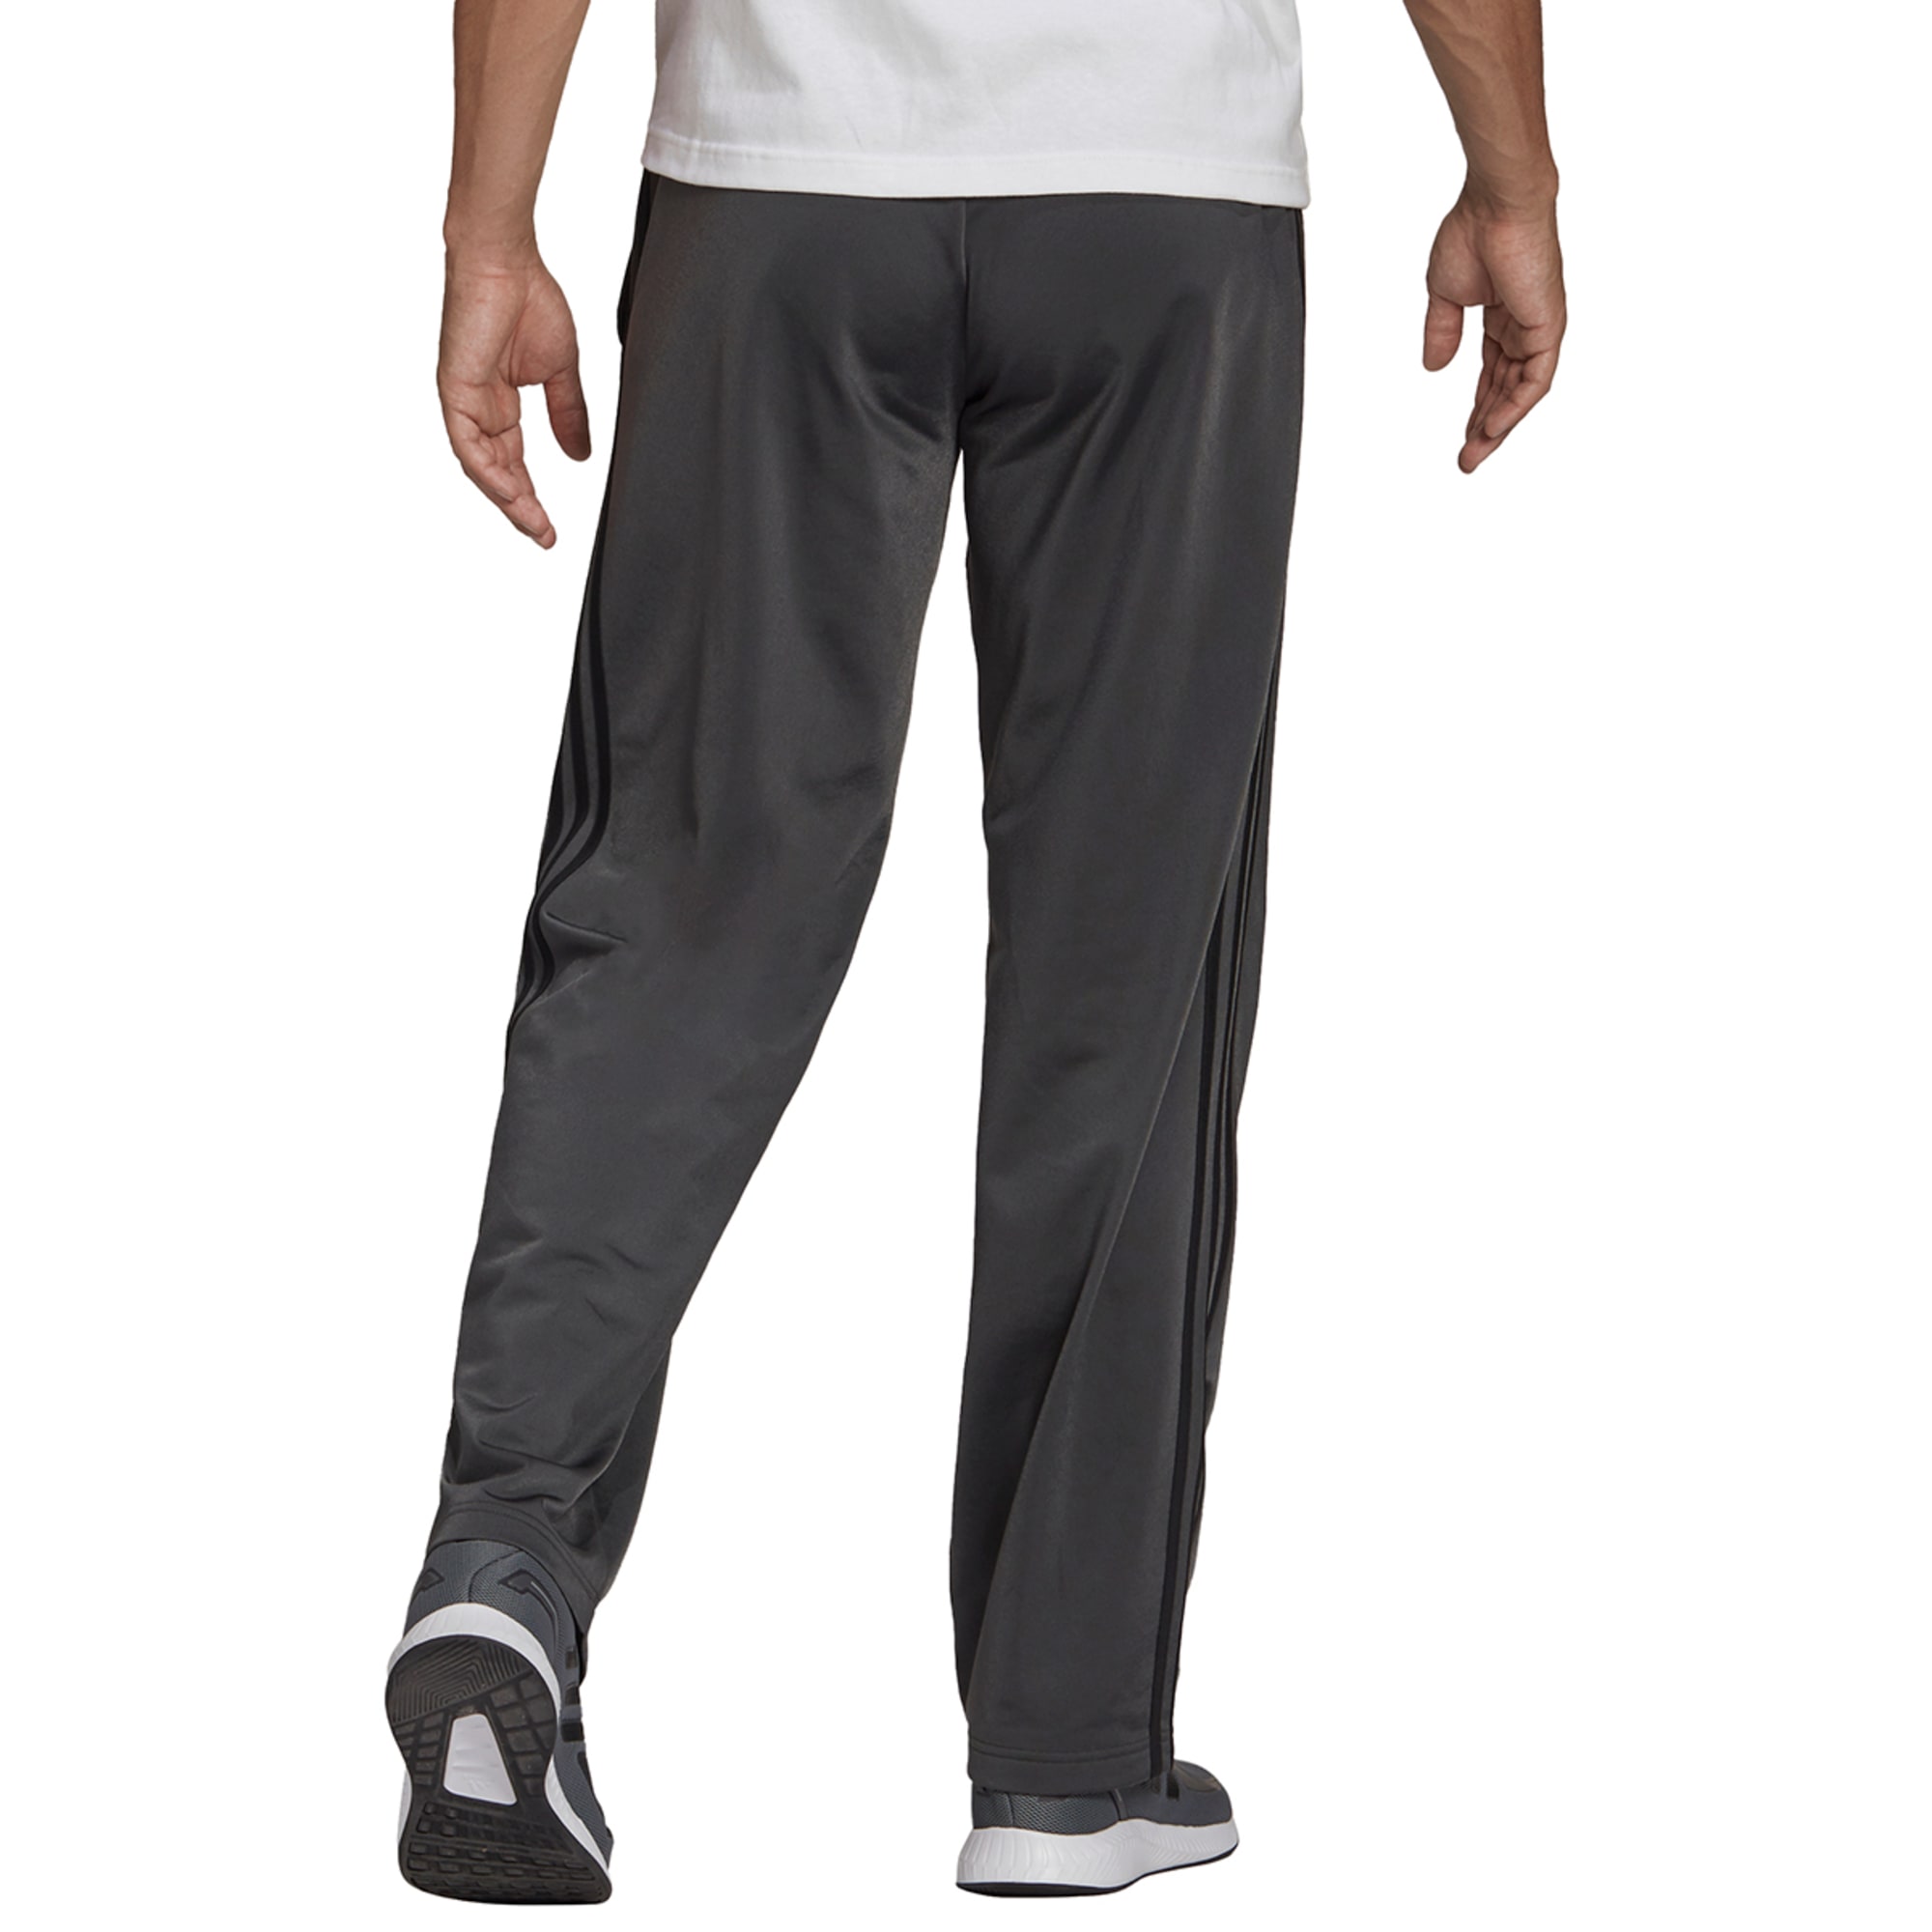  adidas Men's Three Stripe Tricot Pants, Dark Grey